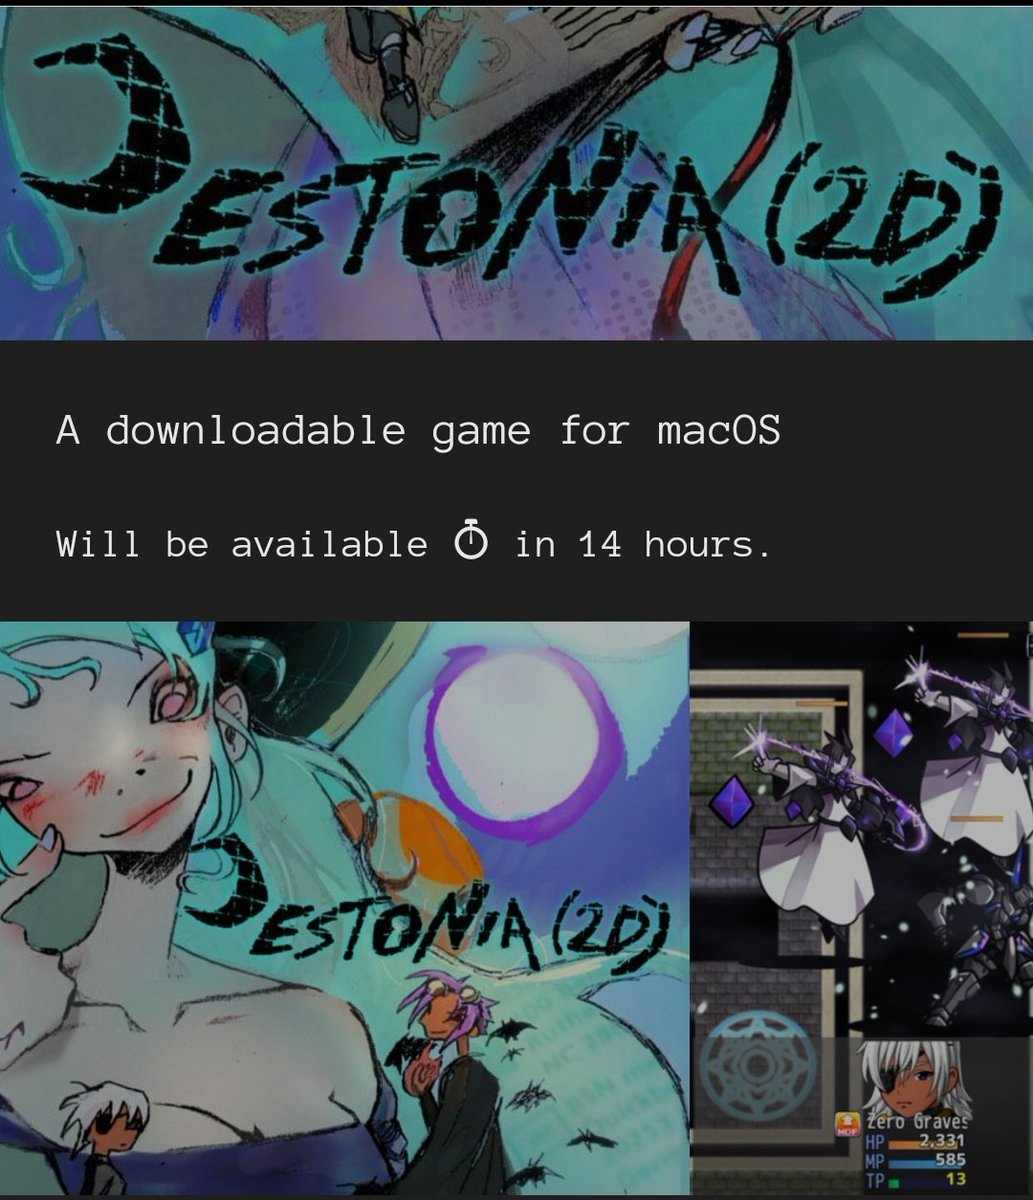 We release our 1st video game: Destonia (2D) @ midnight! 
🌐☔💎💻 ++

#gamedev #gothikastudios 
#destonia2D #itchio #indiedev 
#indiegame

gothikastudios.itch.io/destonia2d